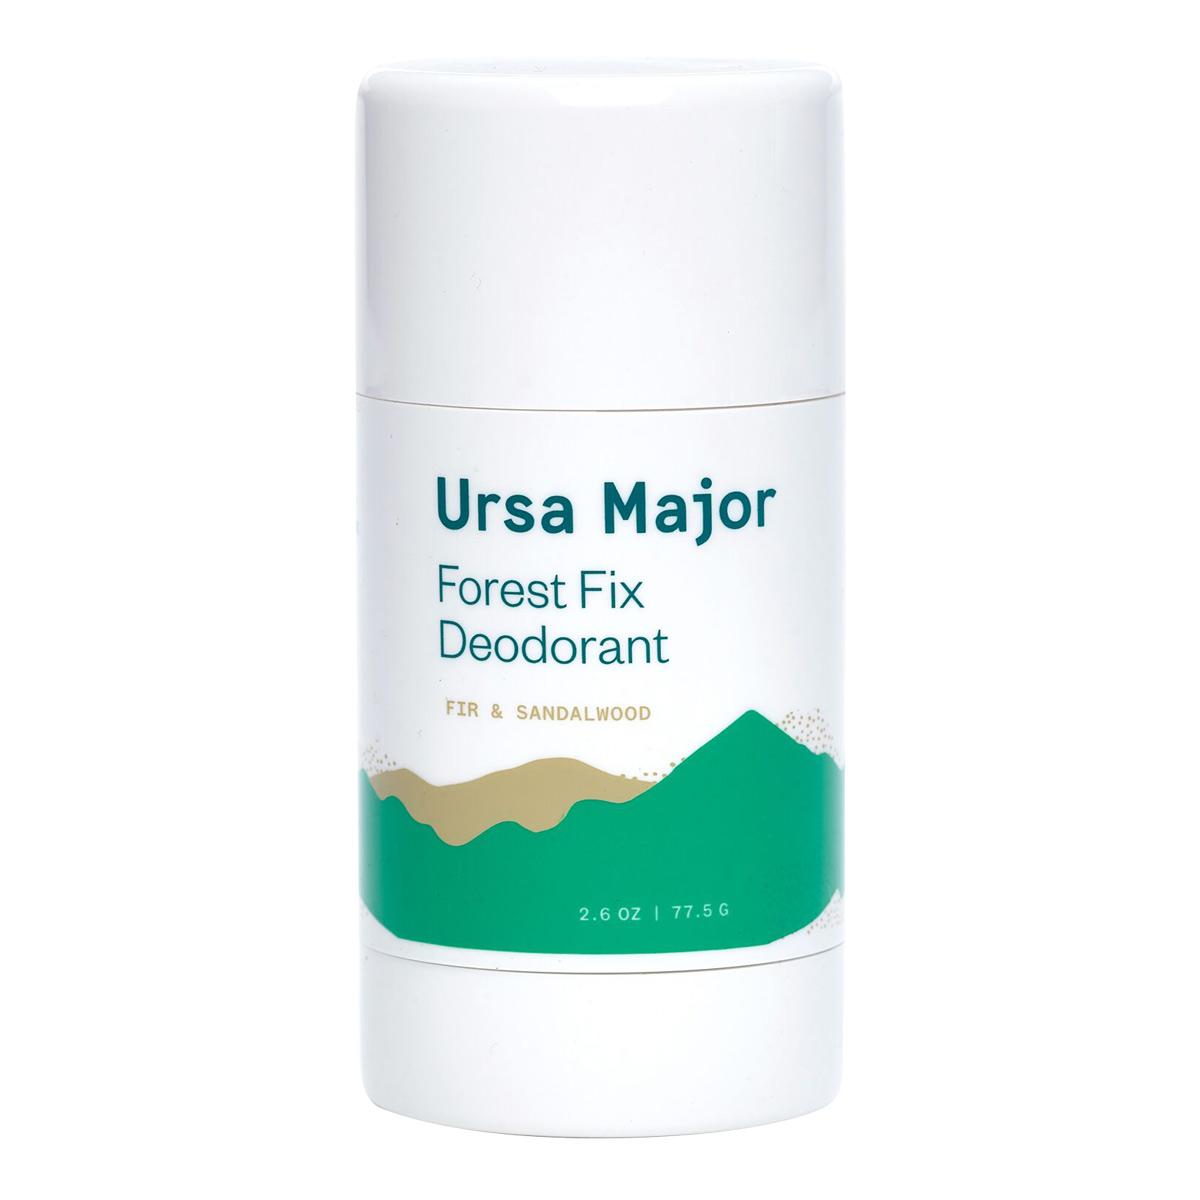 Primary image of Forest Fix Deodorant